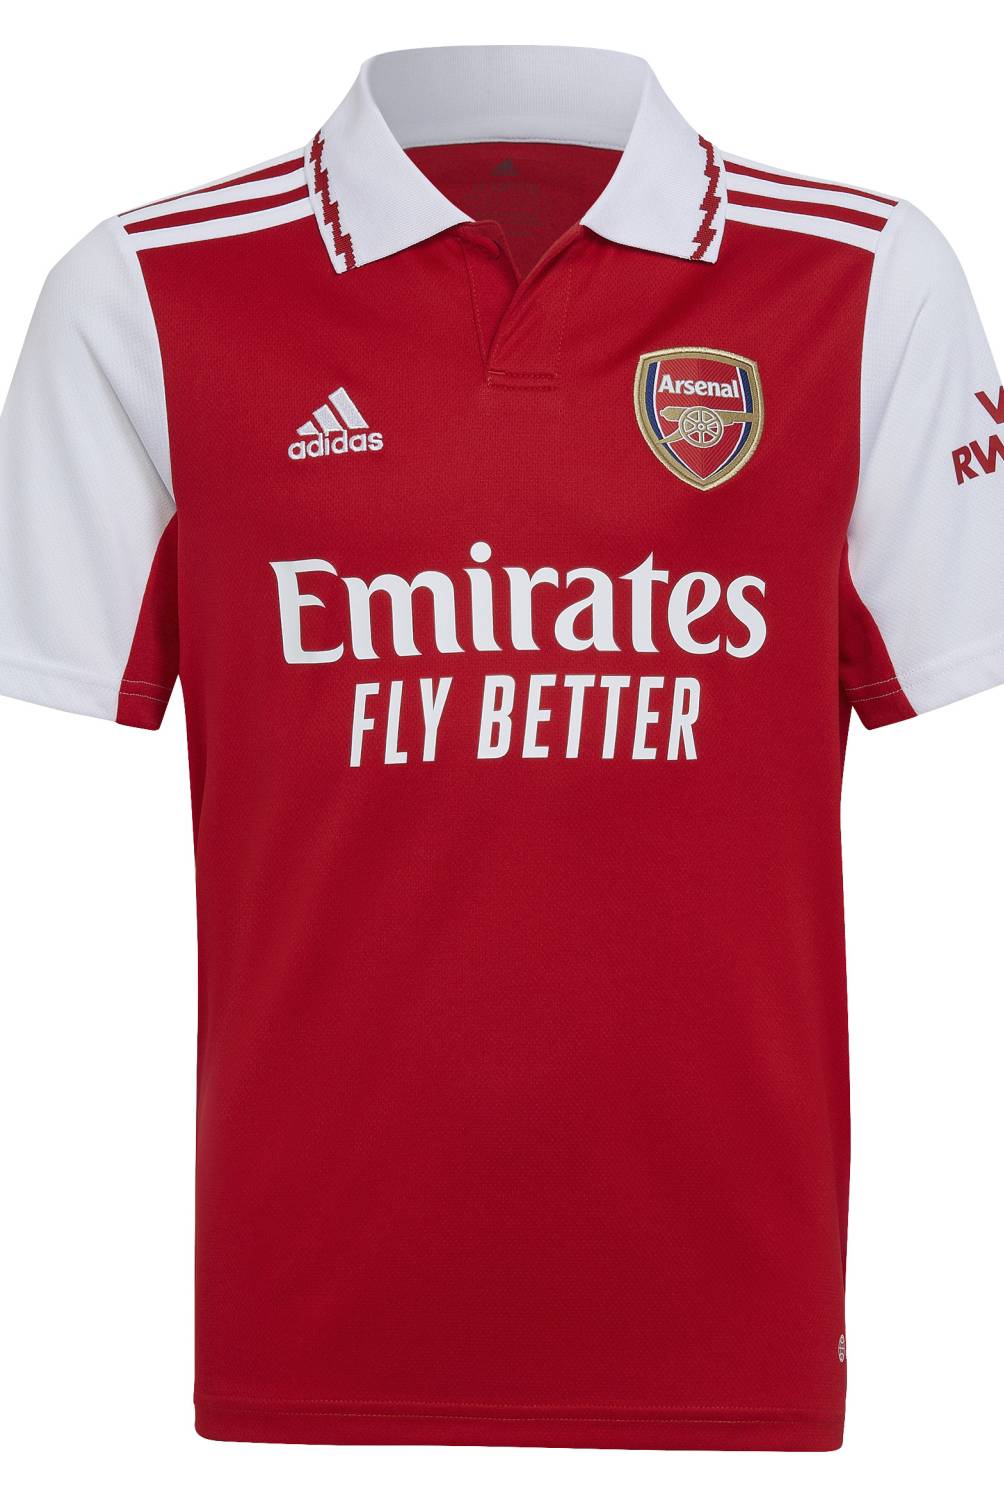 ADIDAS - Adidas Camiseta de Fútbol Local Arsenal Niño